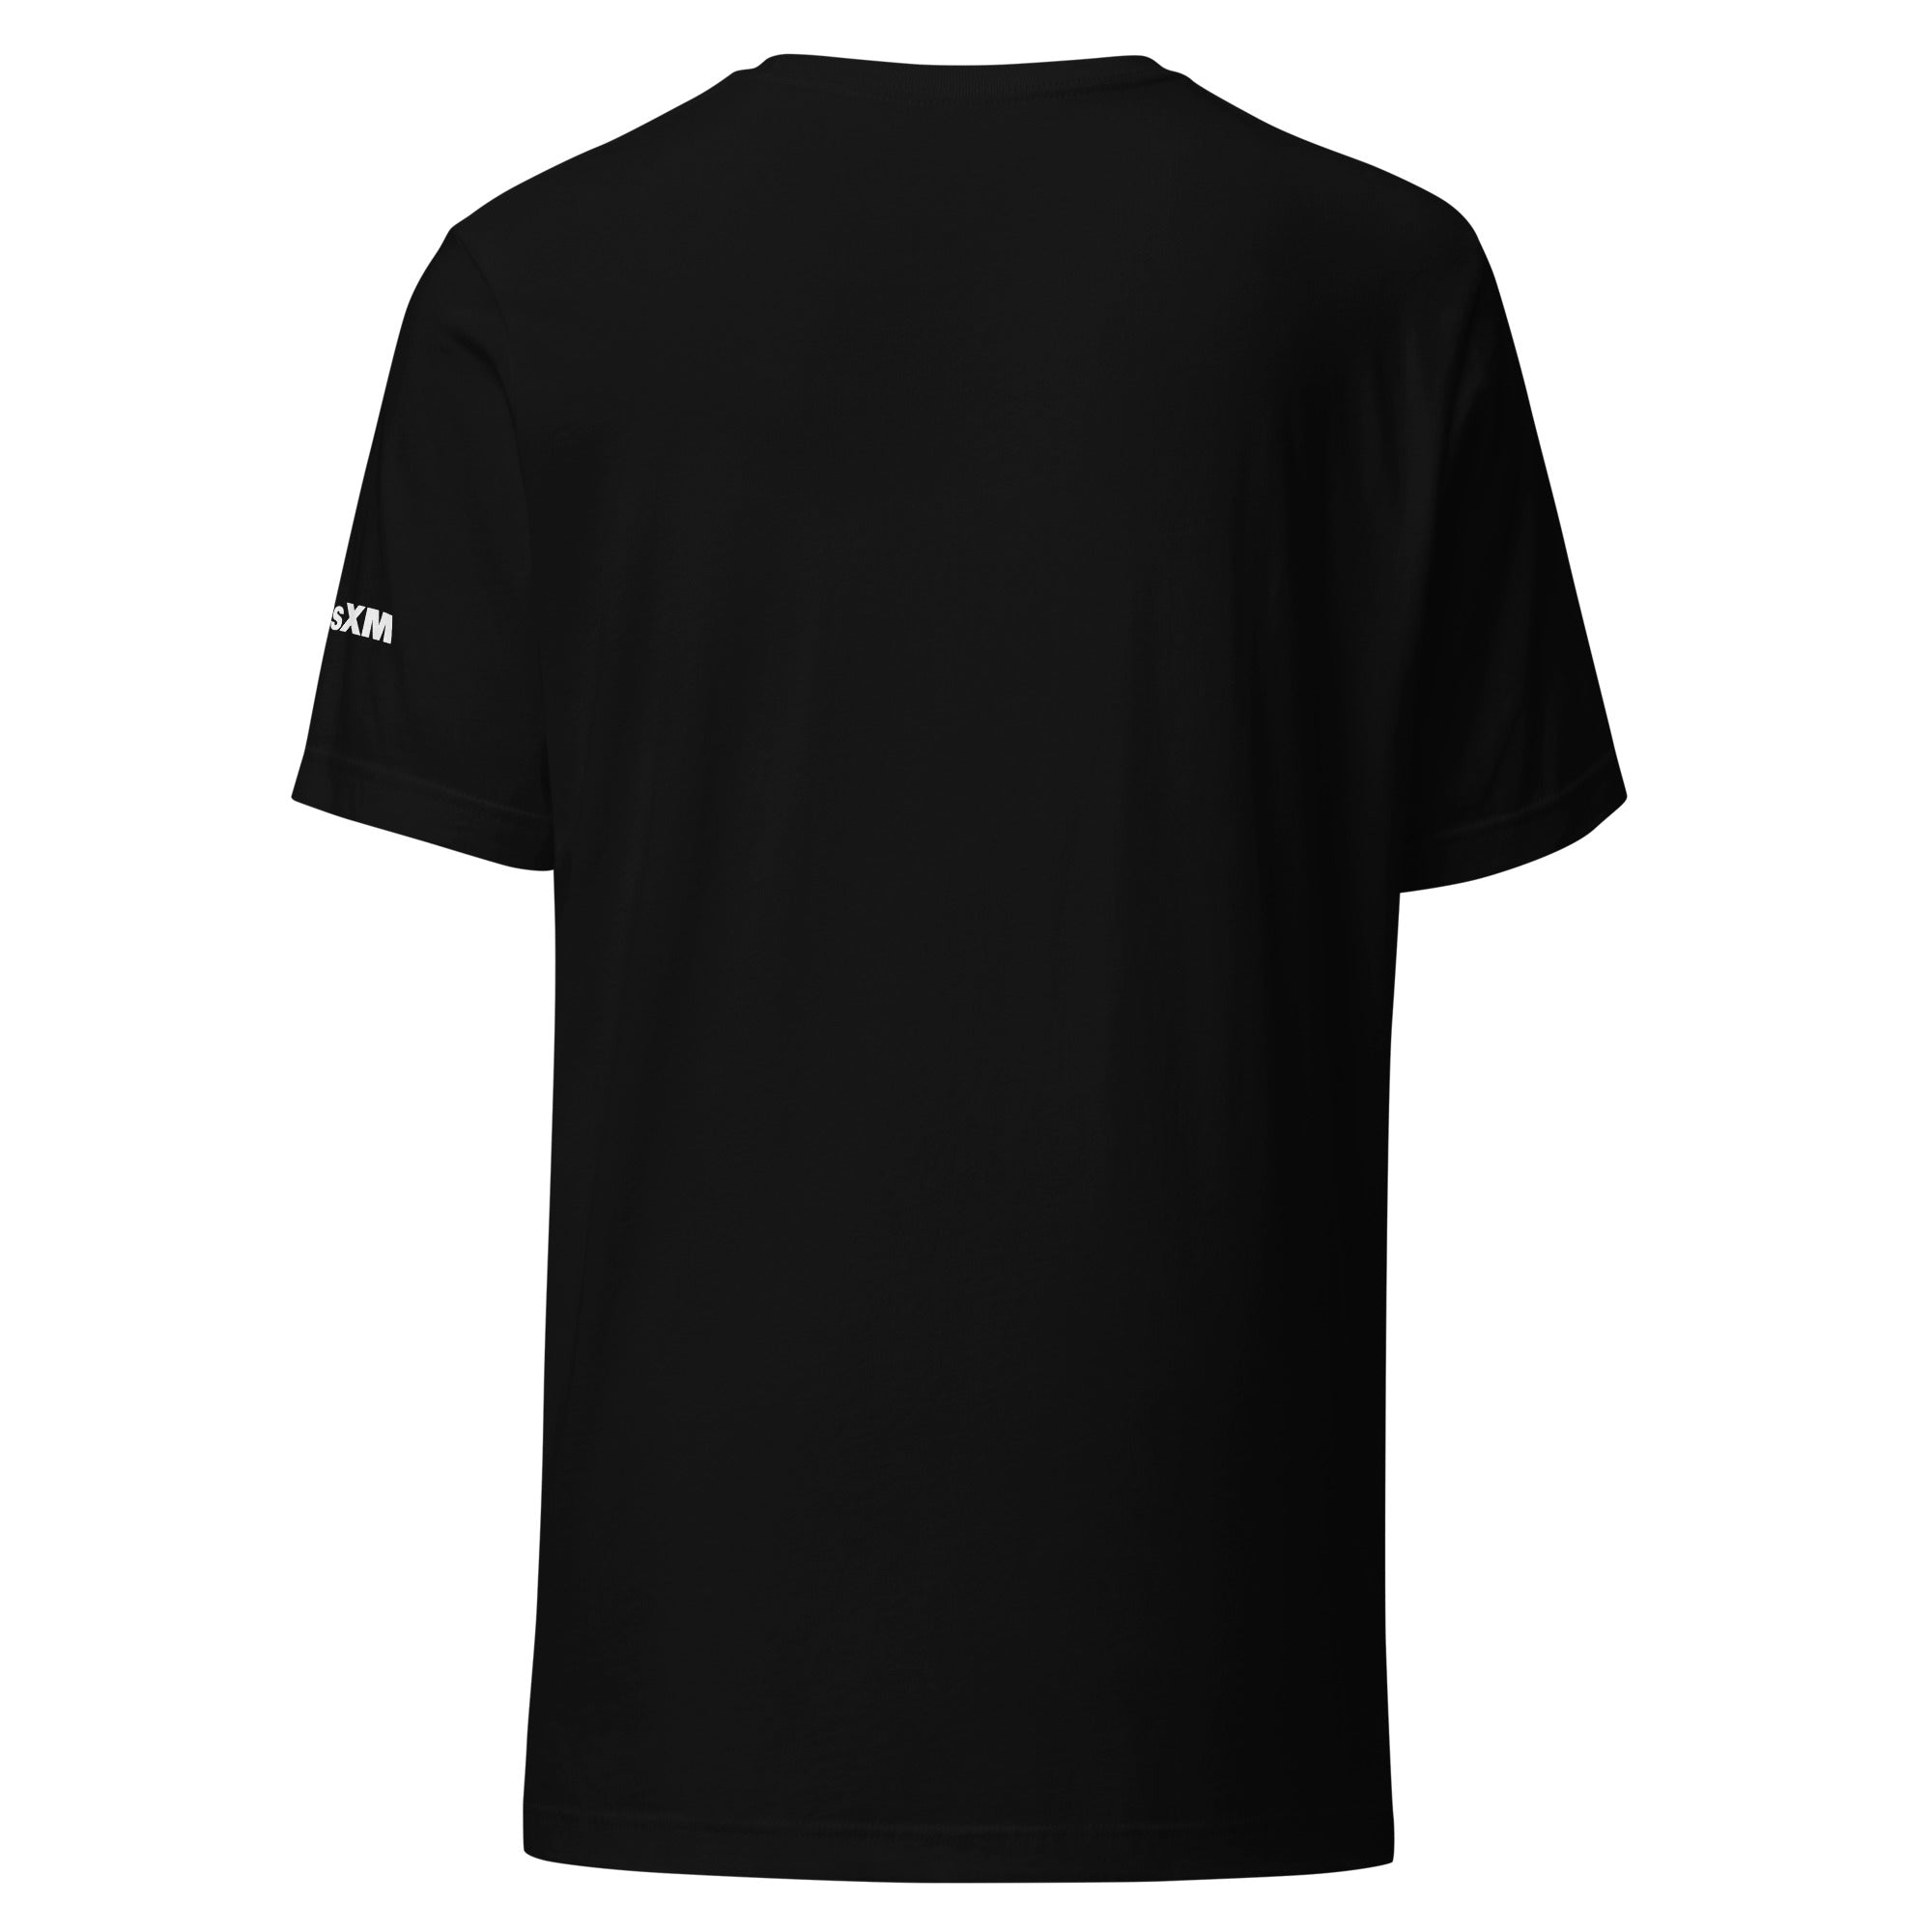 Lithium: T-shirt (Black)